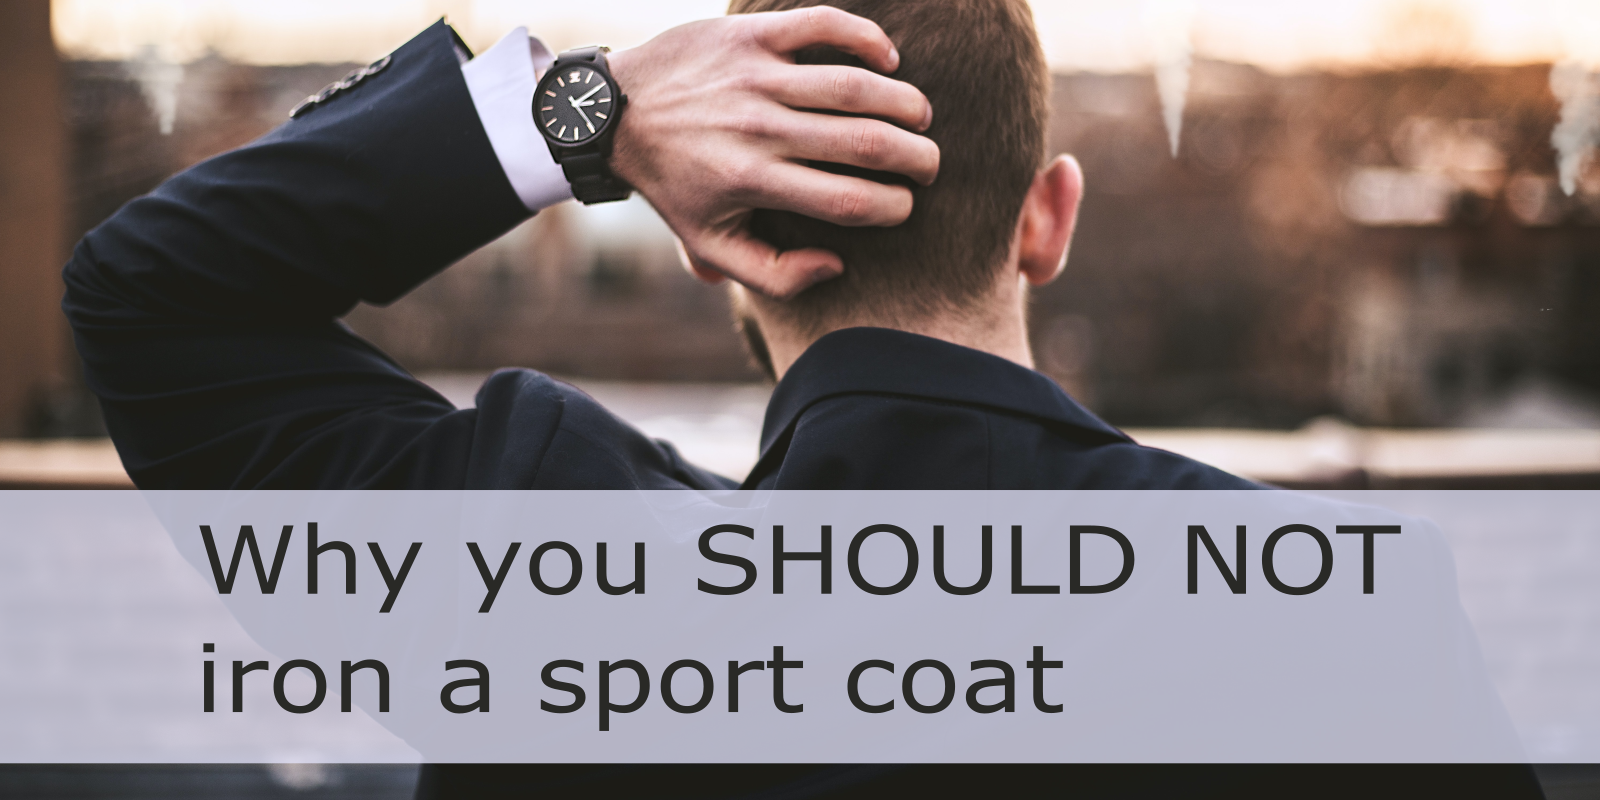 iron a sport coat